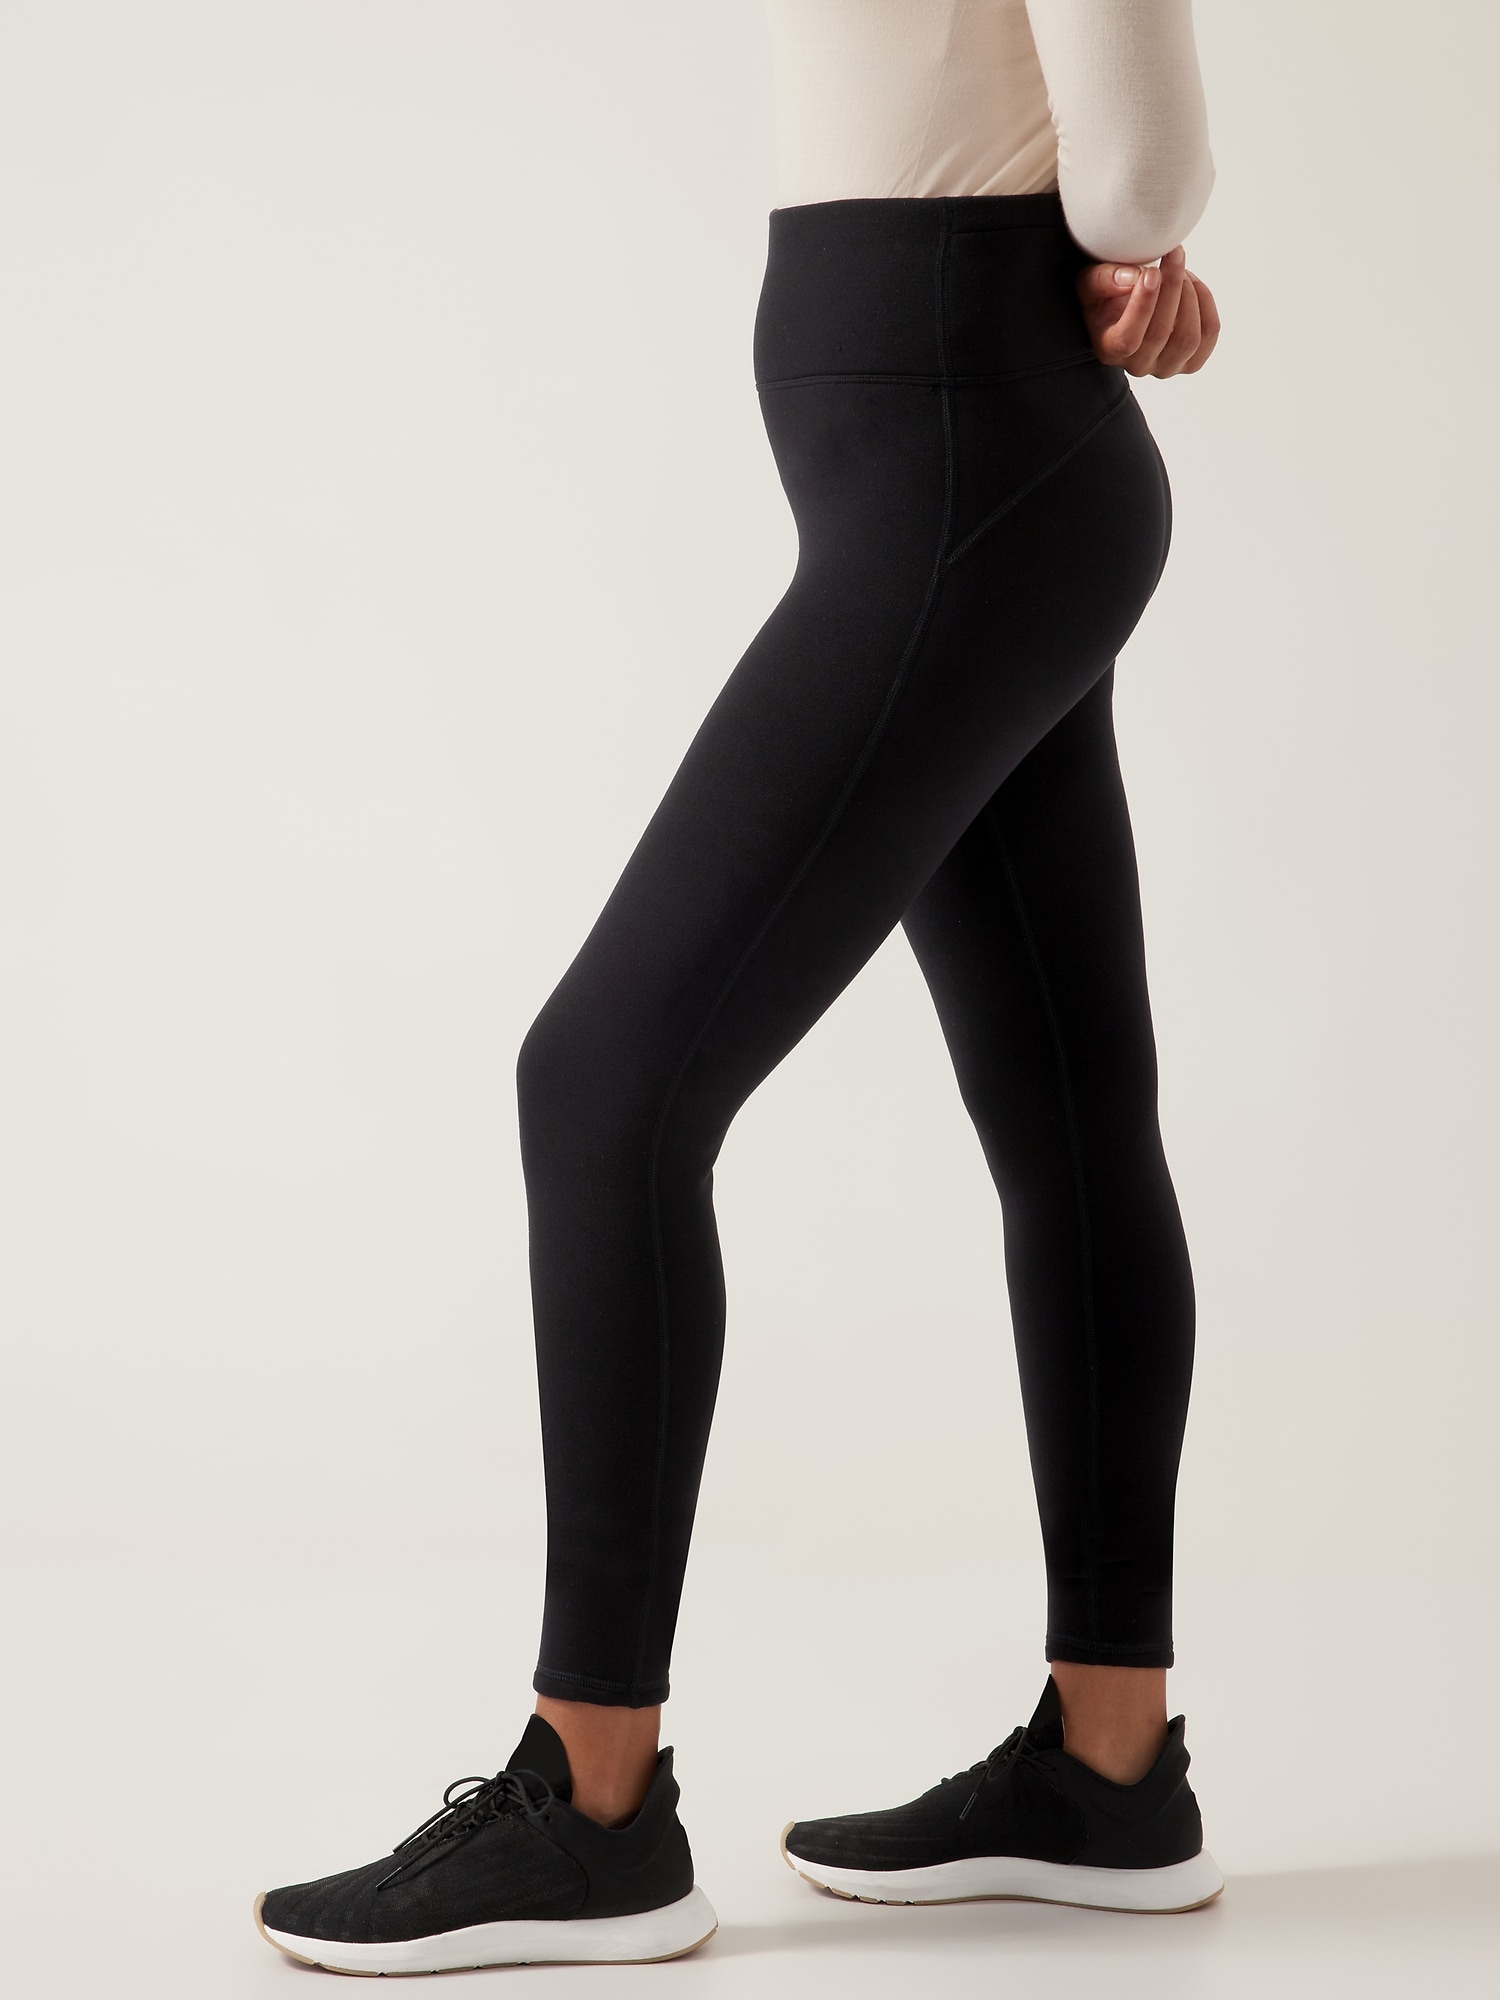 Athleta Metro Drifter tight black leggings with zipper detail size